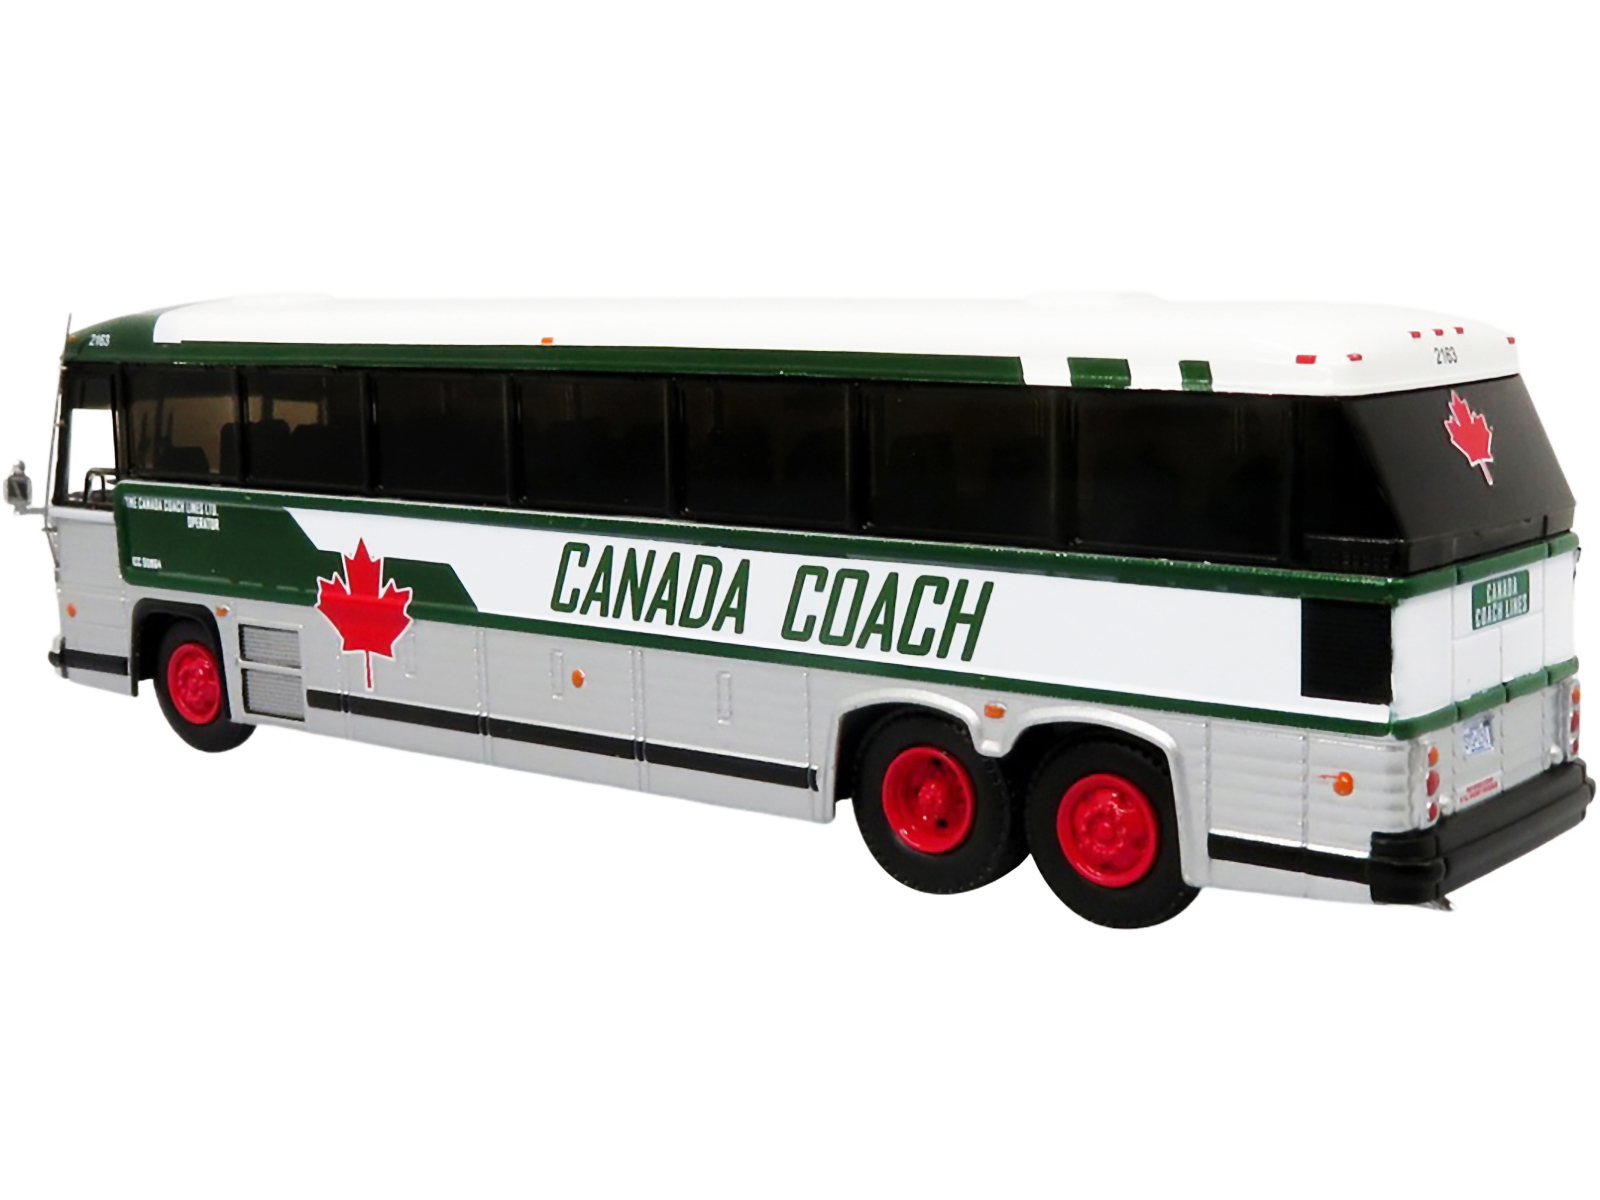 Iconic Replicas 1980 MCI MC-9 Crusader II Intercity Coach Bus "Hamilton via 8" "Canada Coach" 1/87 (HO) Diecast Model by Iconic Replicas